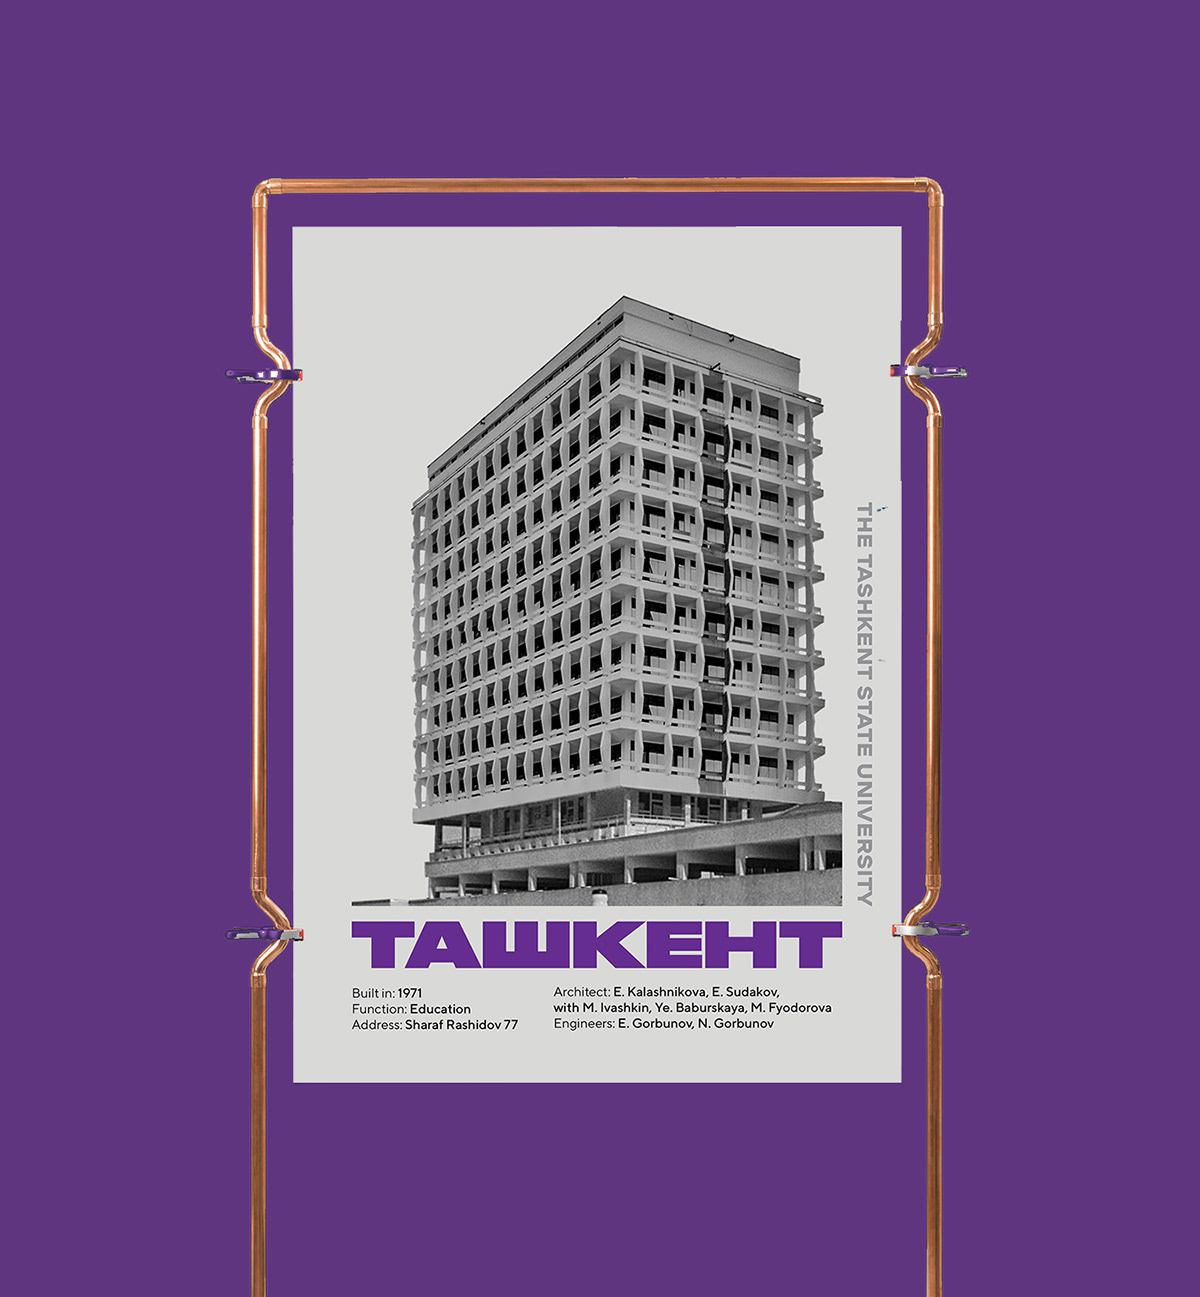 tashkent Soviet modernism architecture posters social modernism